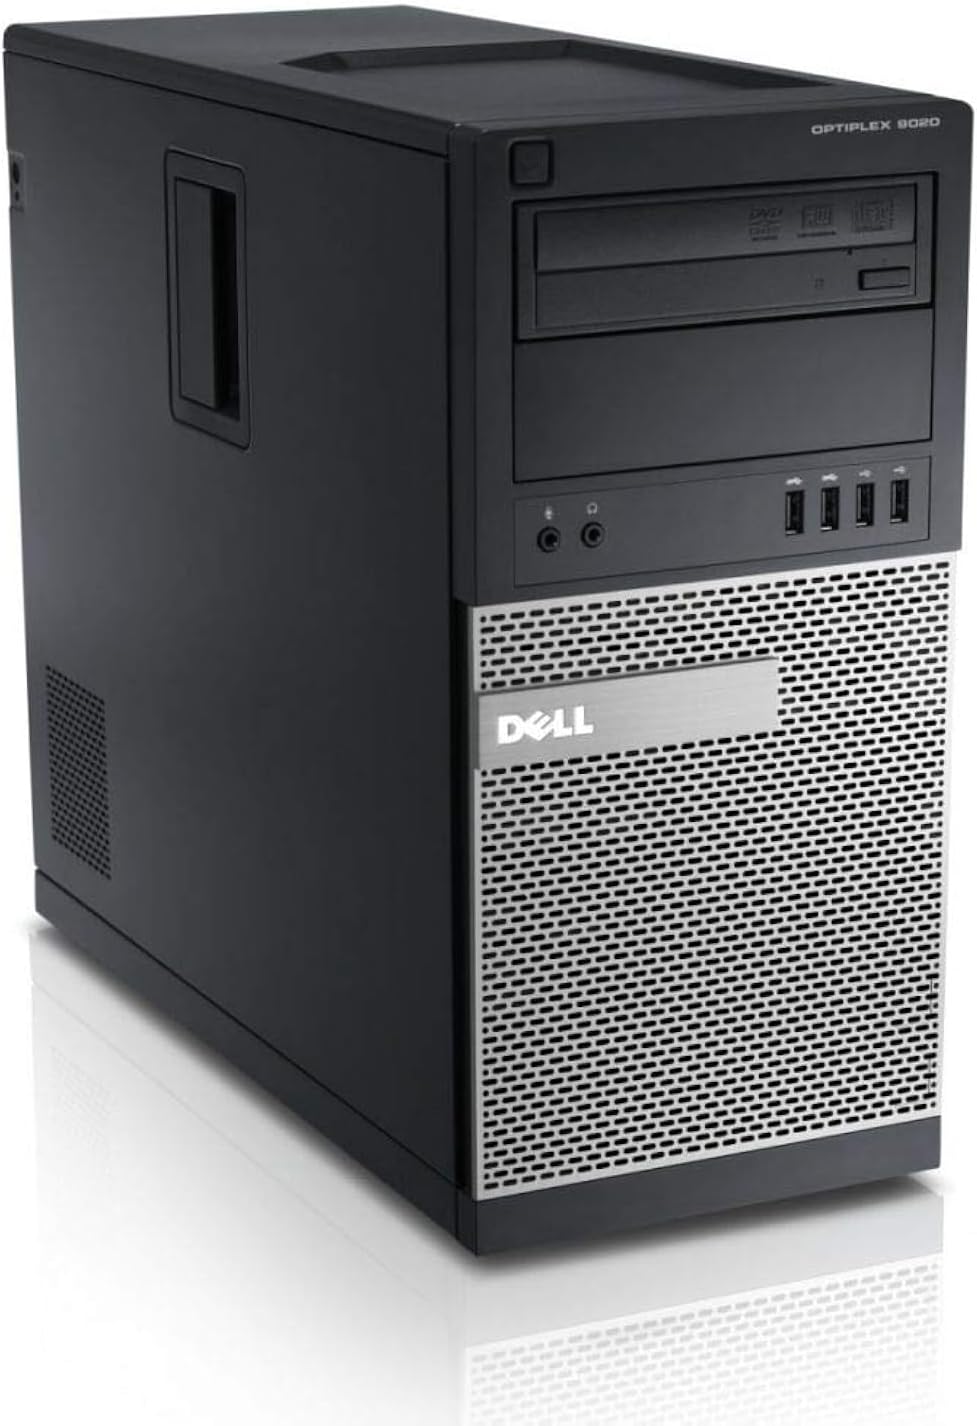 Dell Optiplex 9020 MT Tower PC, Intel Core i7-6700, 500 GB HDD, 4 GB RAM, Intel HD Graphics, DOS - Black